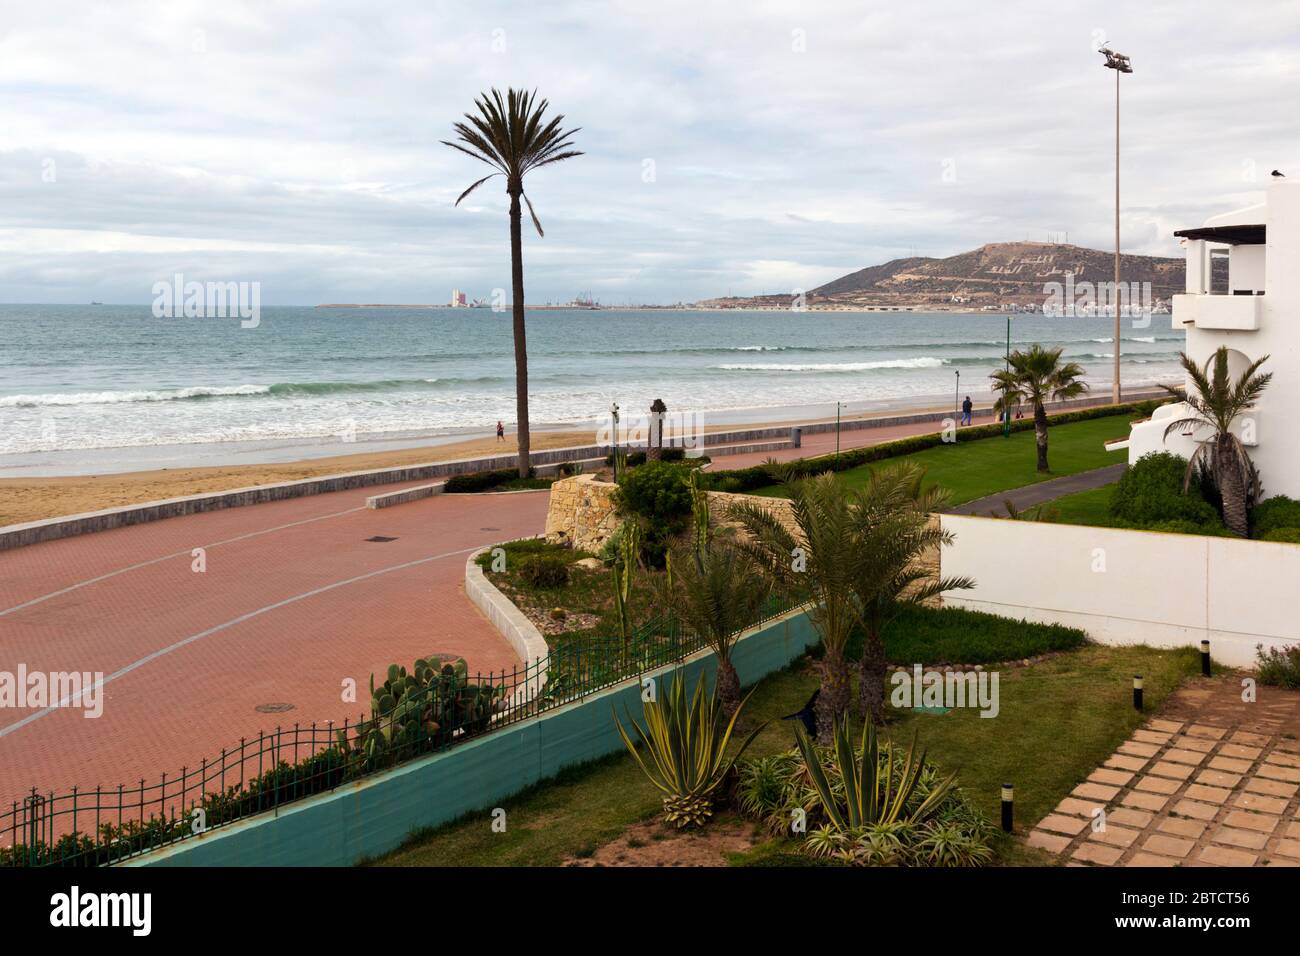 Morocco, Agadir, Coastline with beach and promenade Stock Photo